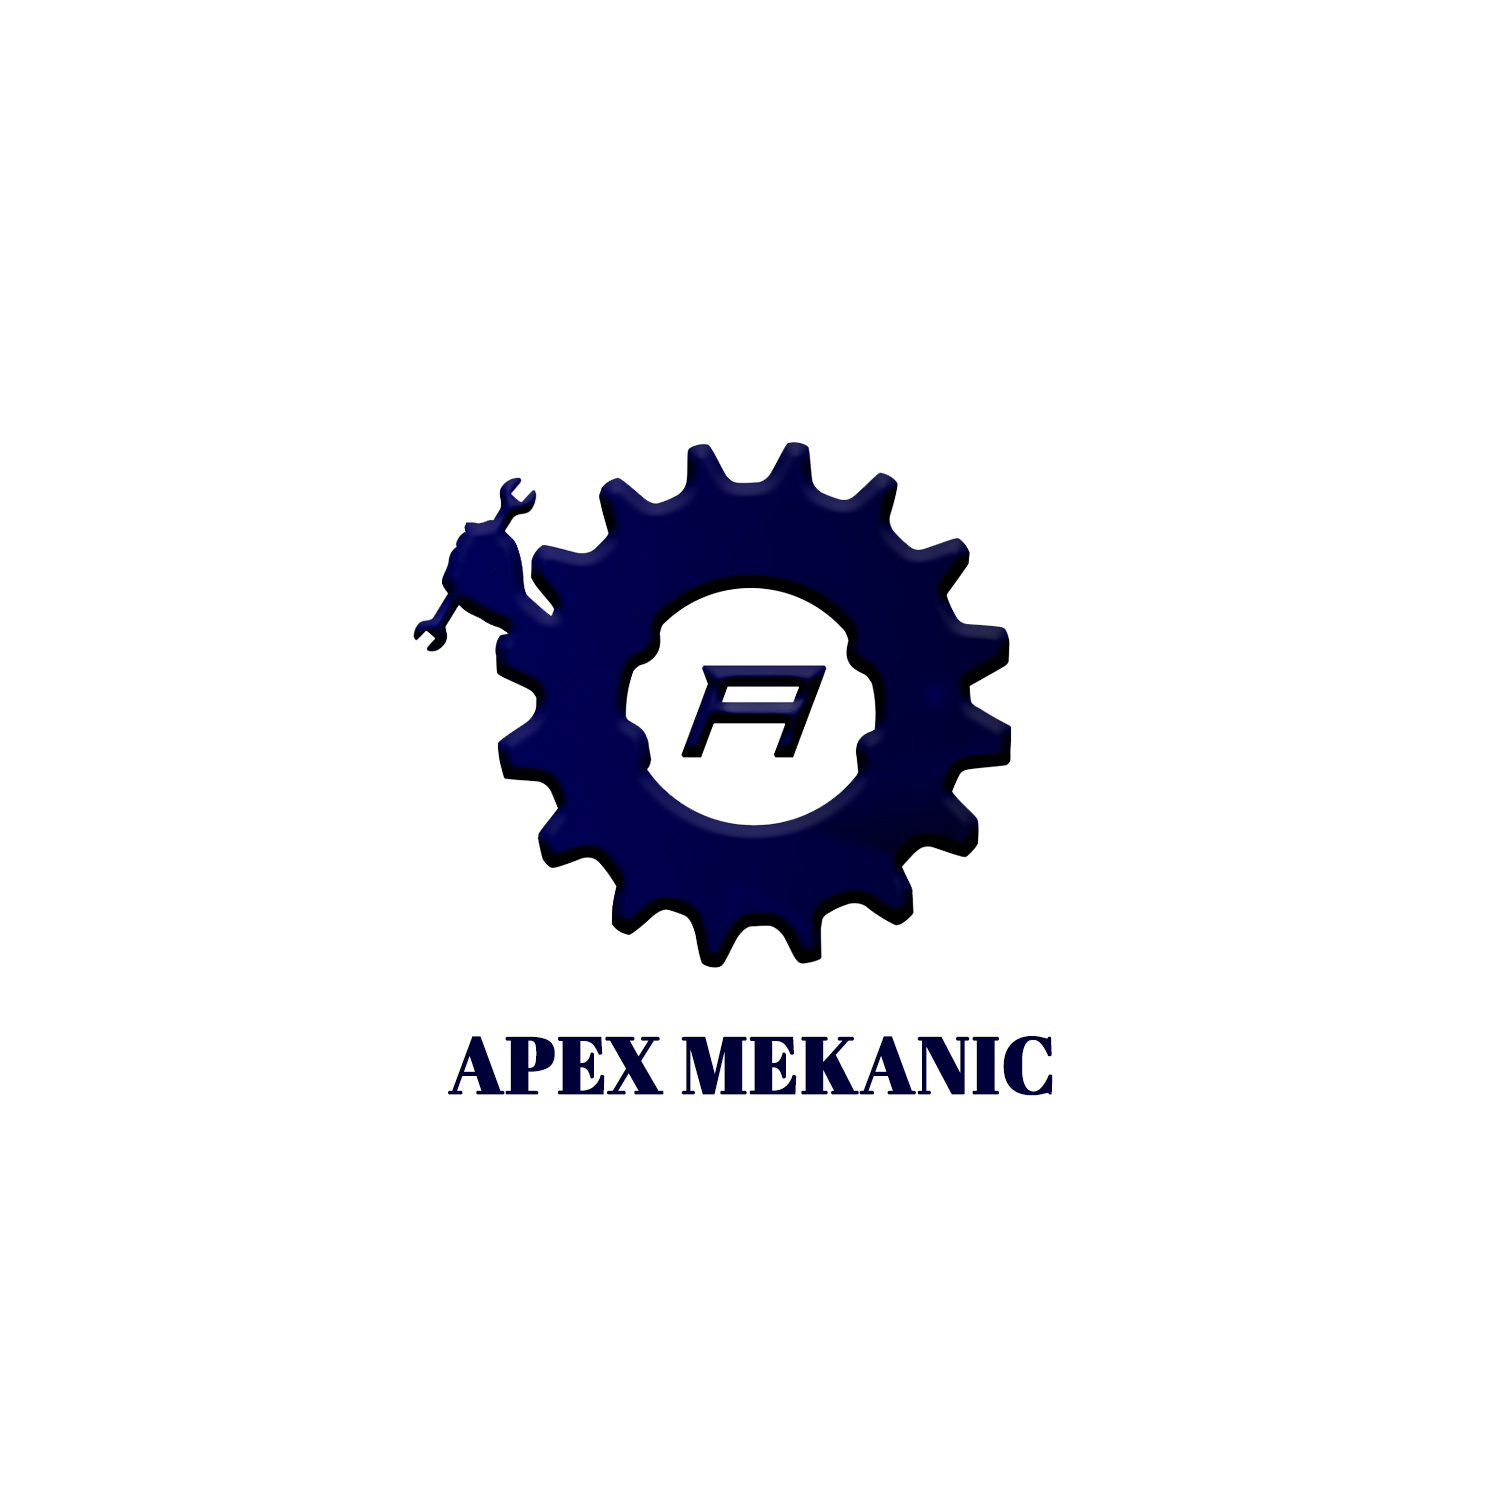 Apex Mekanic anyservice service provider